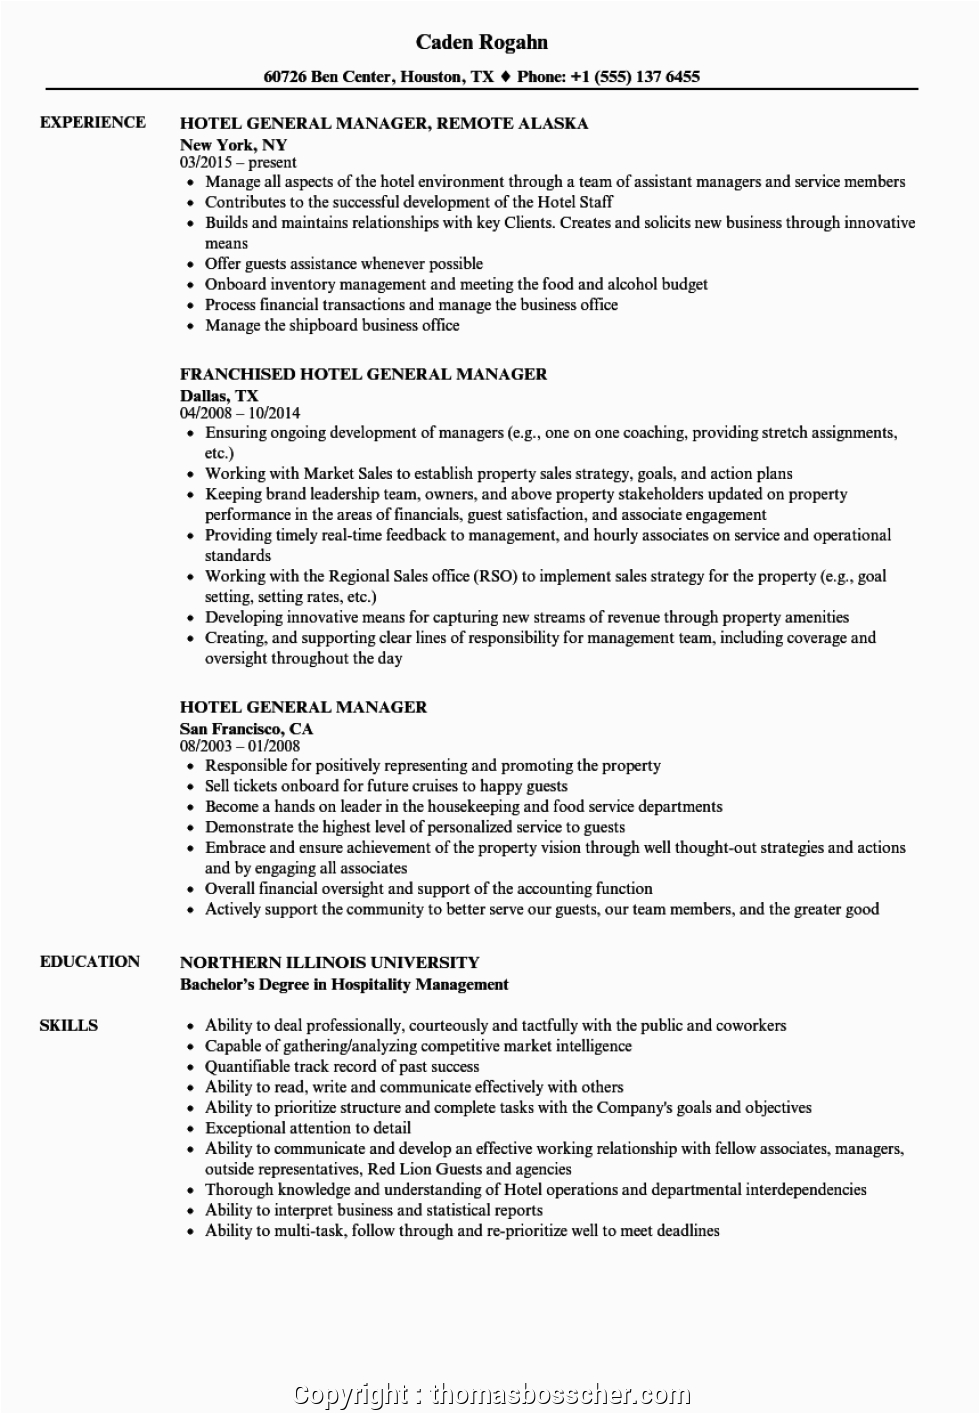 Sample Resume for Hotel and Restaurant Management Free Hotel Manager Cv Doc General Manager Resume Resumes